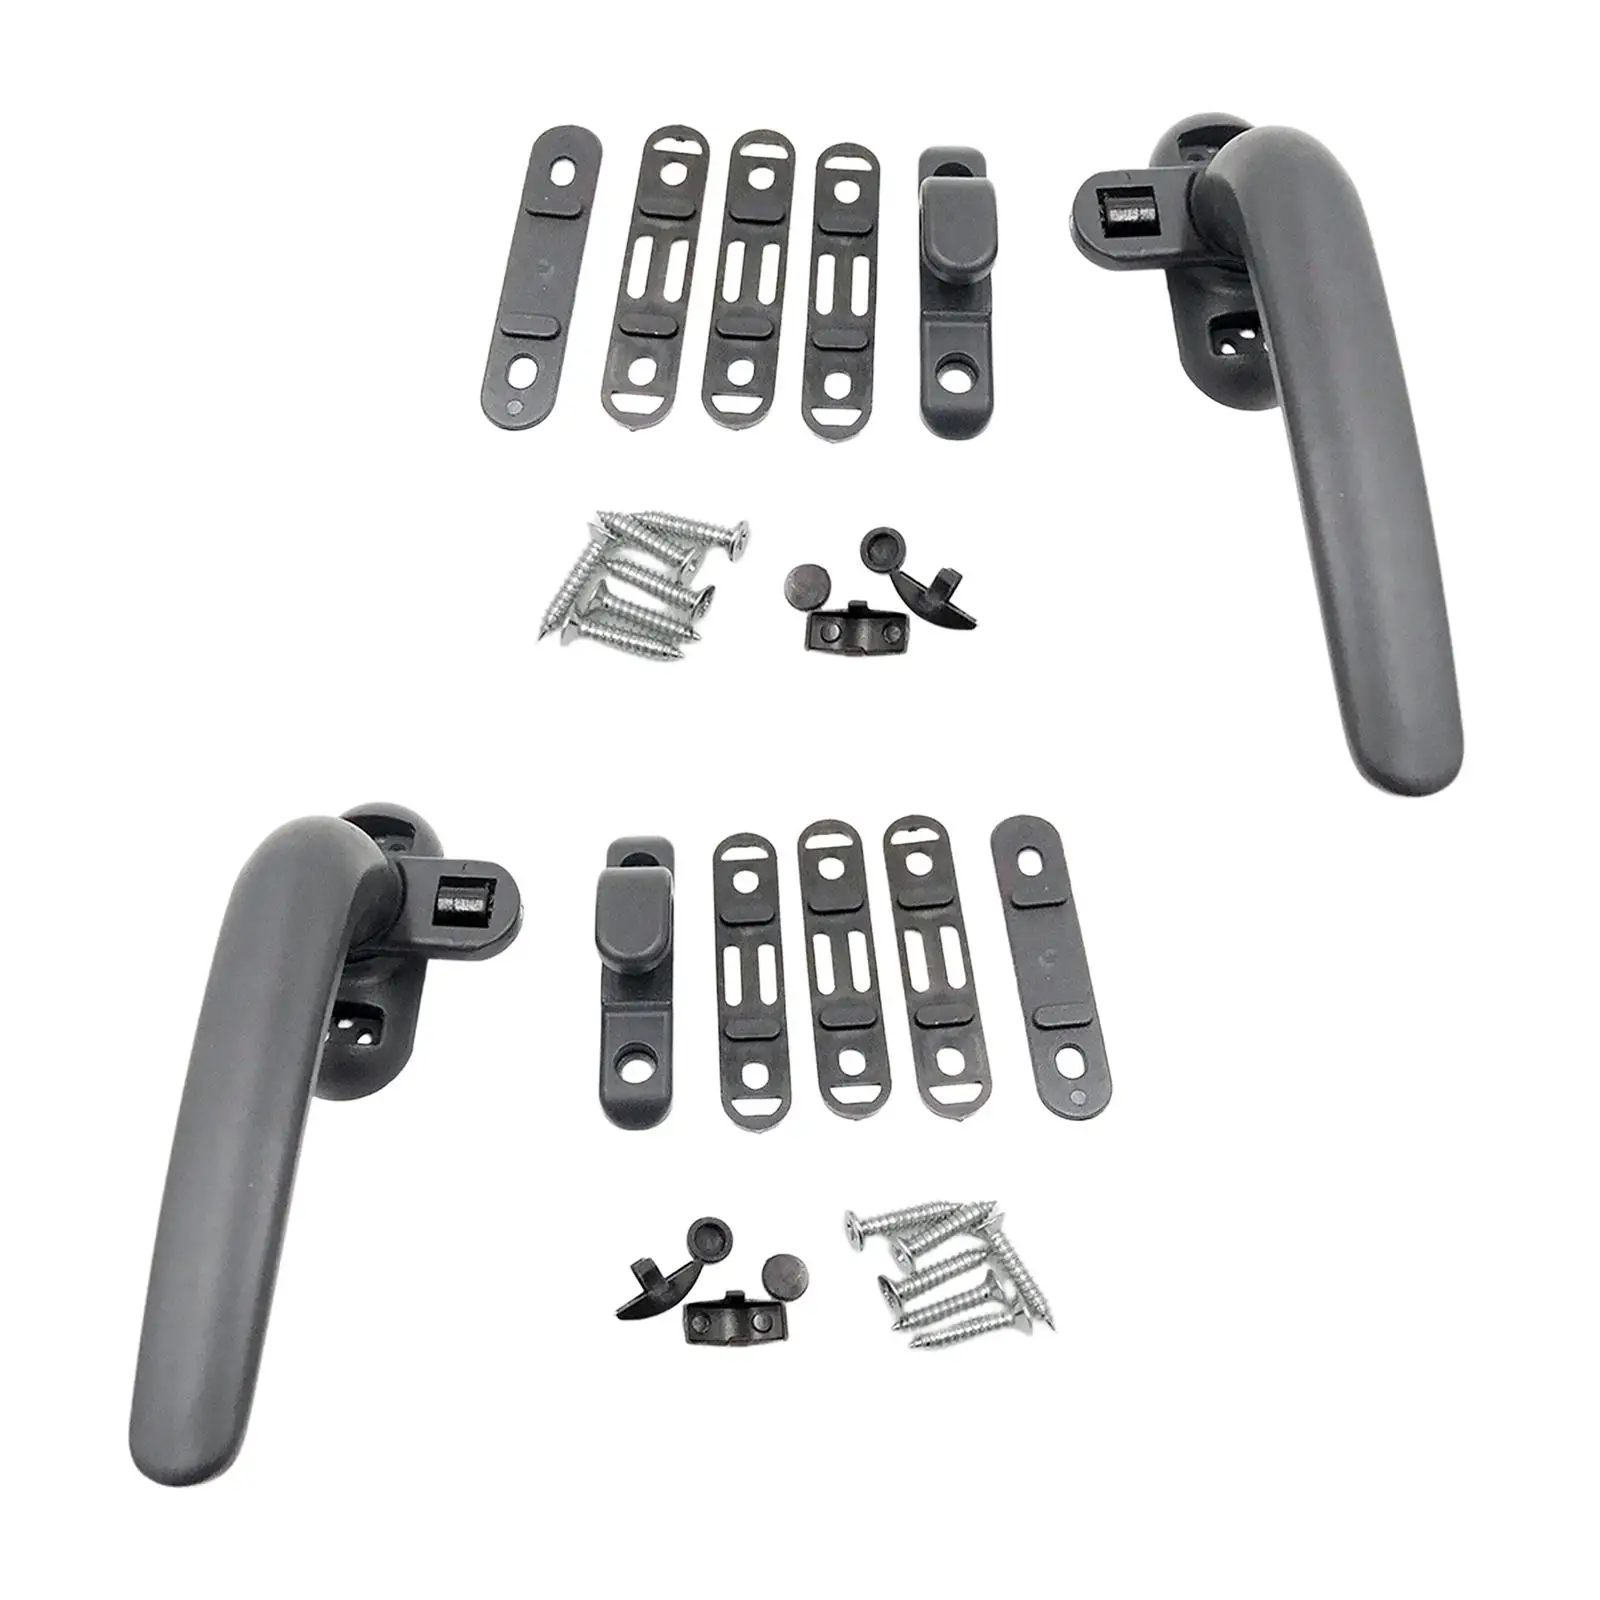 Aluminum Alloy Window Handles, Universal Casement Locking Handle with Screw